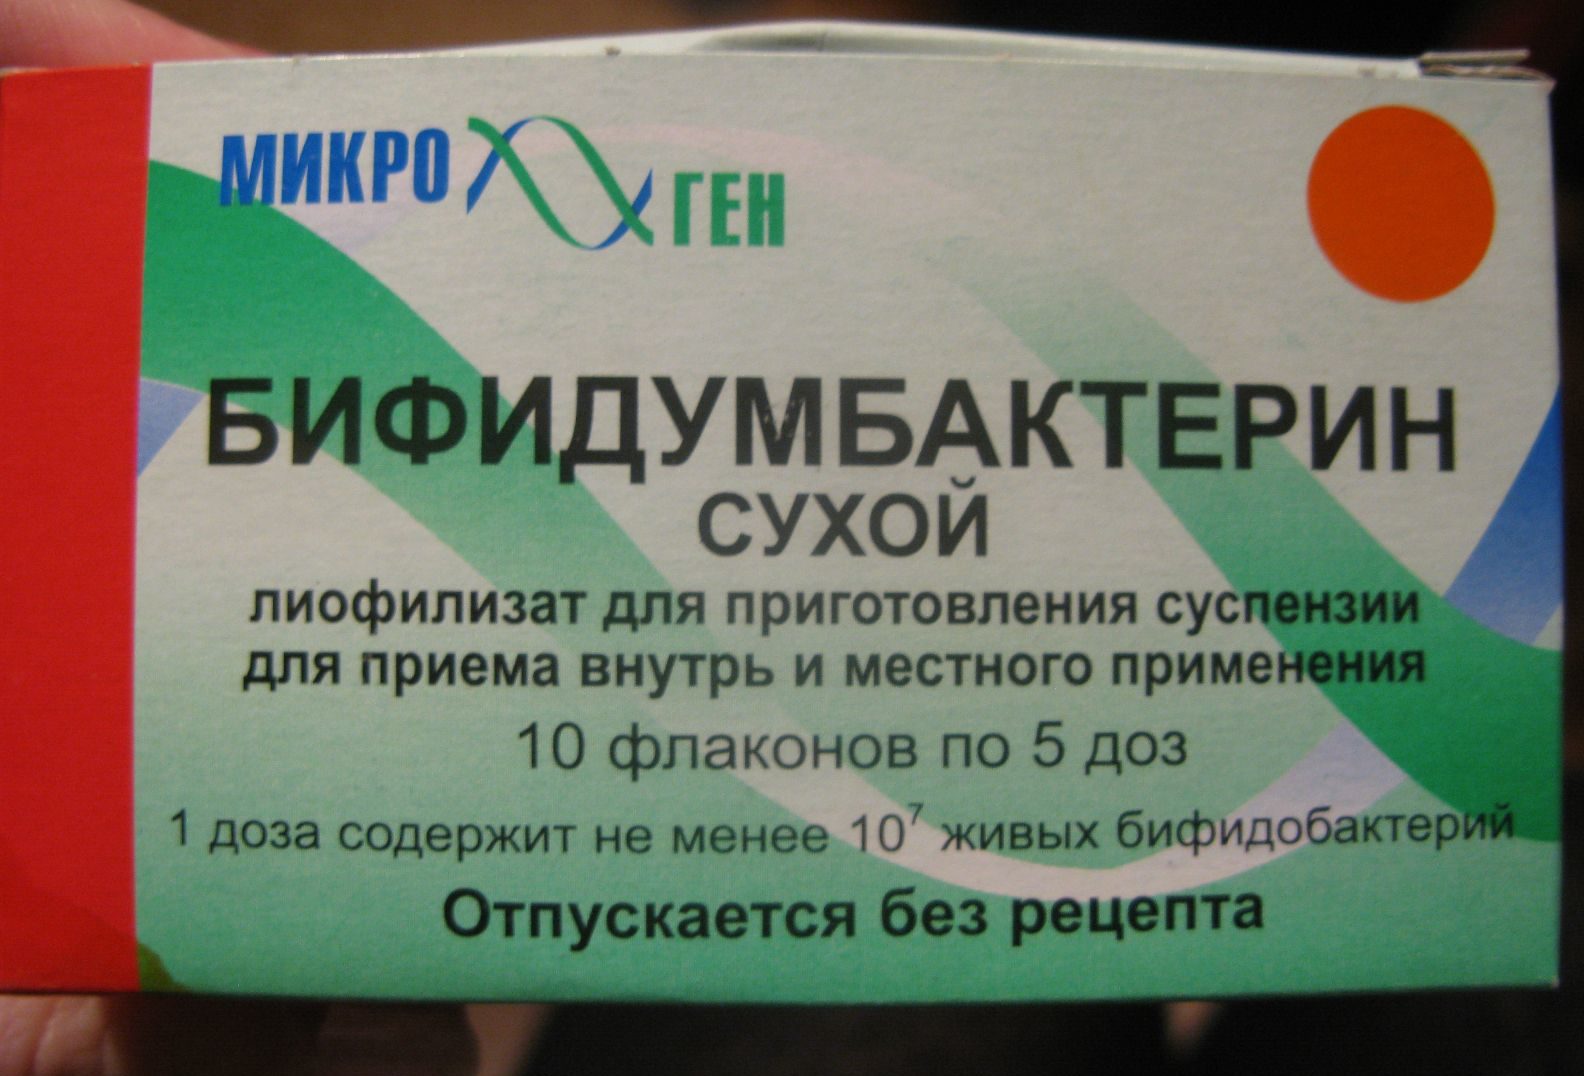 Бифидумбактерин при вздутии живота | nowfoods-ru